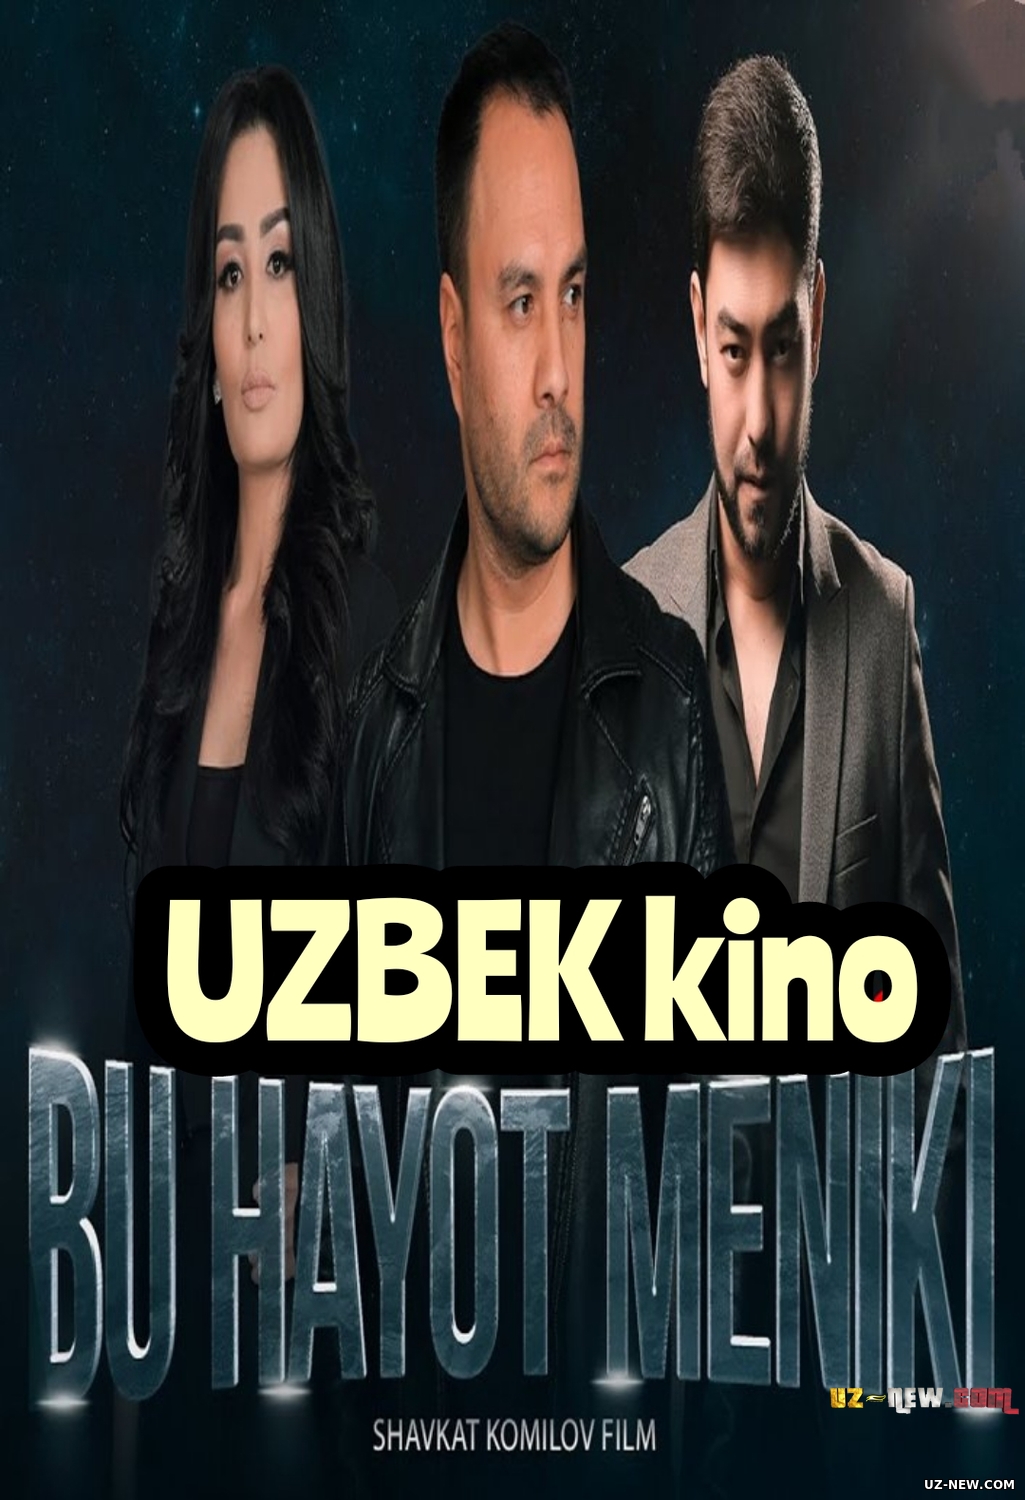 Bu hayot meniki (Uzbek kino) (2022)